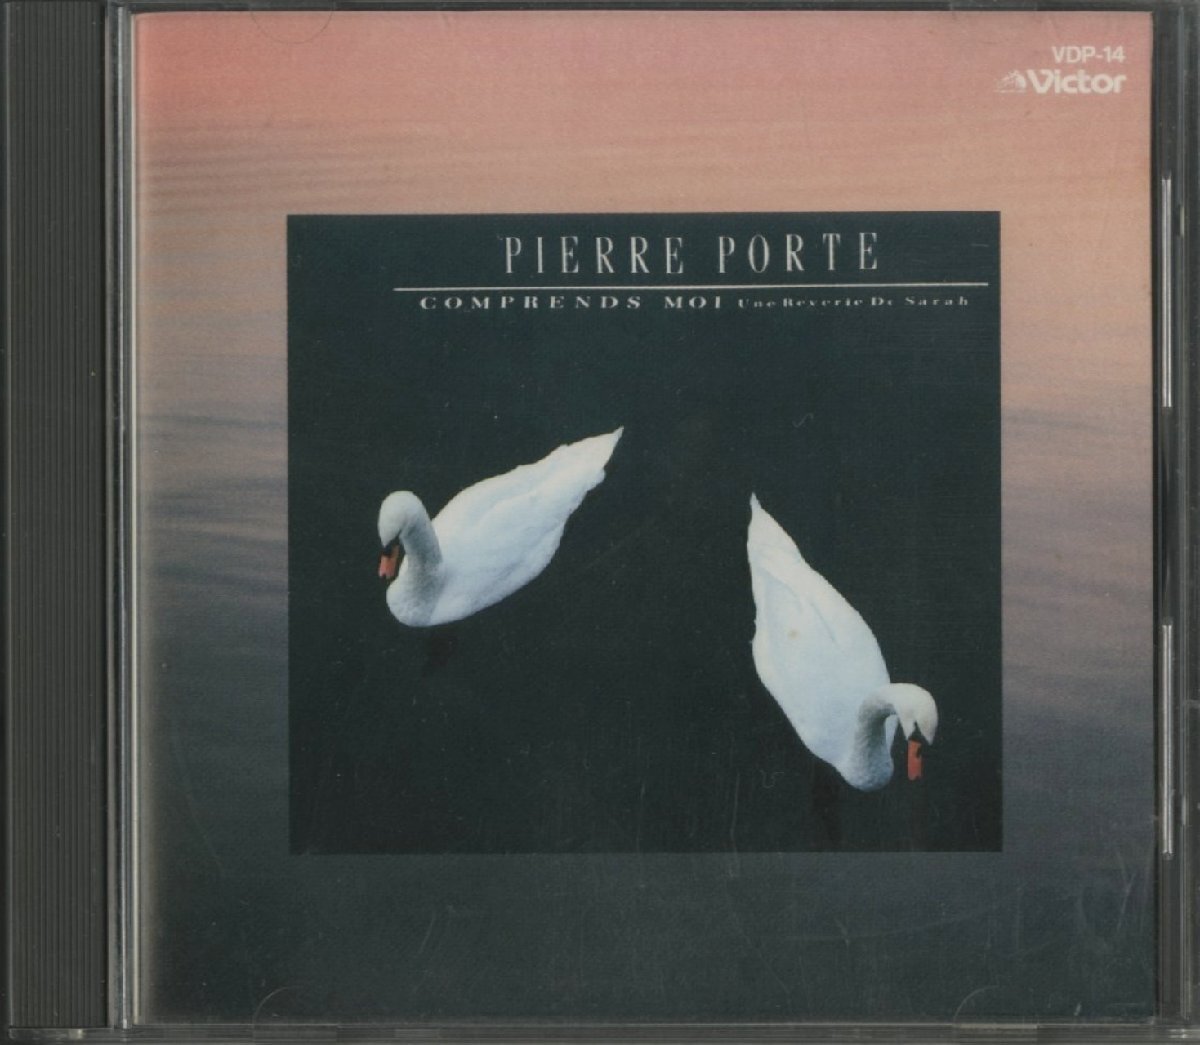 CD/ PIERRE PORTE / サラの祈り / ピエール・ポルト / 国内盤 帯付き VDP-14 40511_画像1